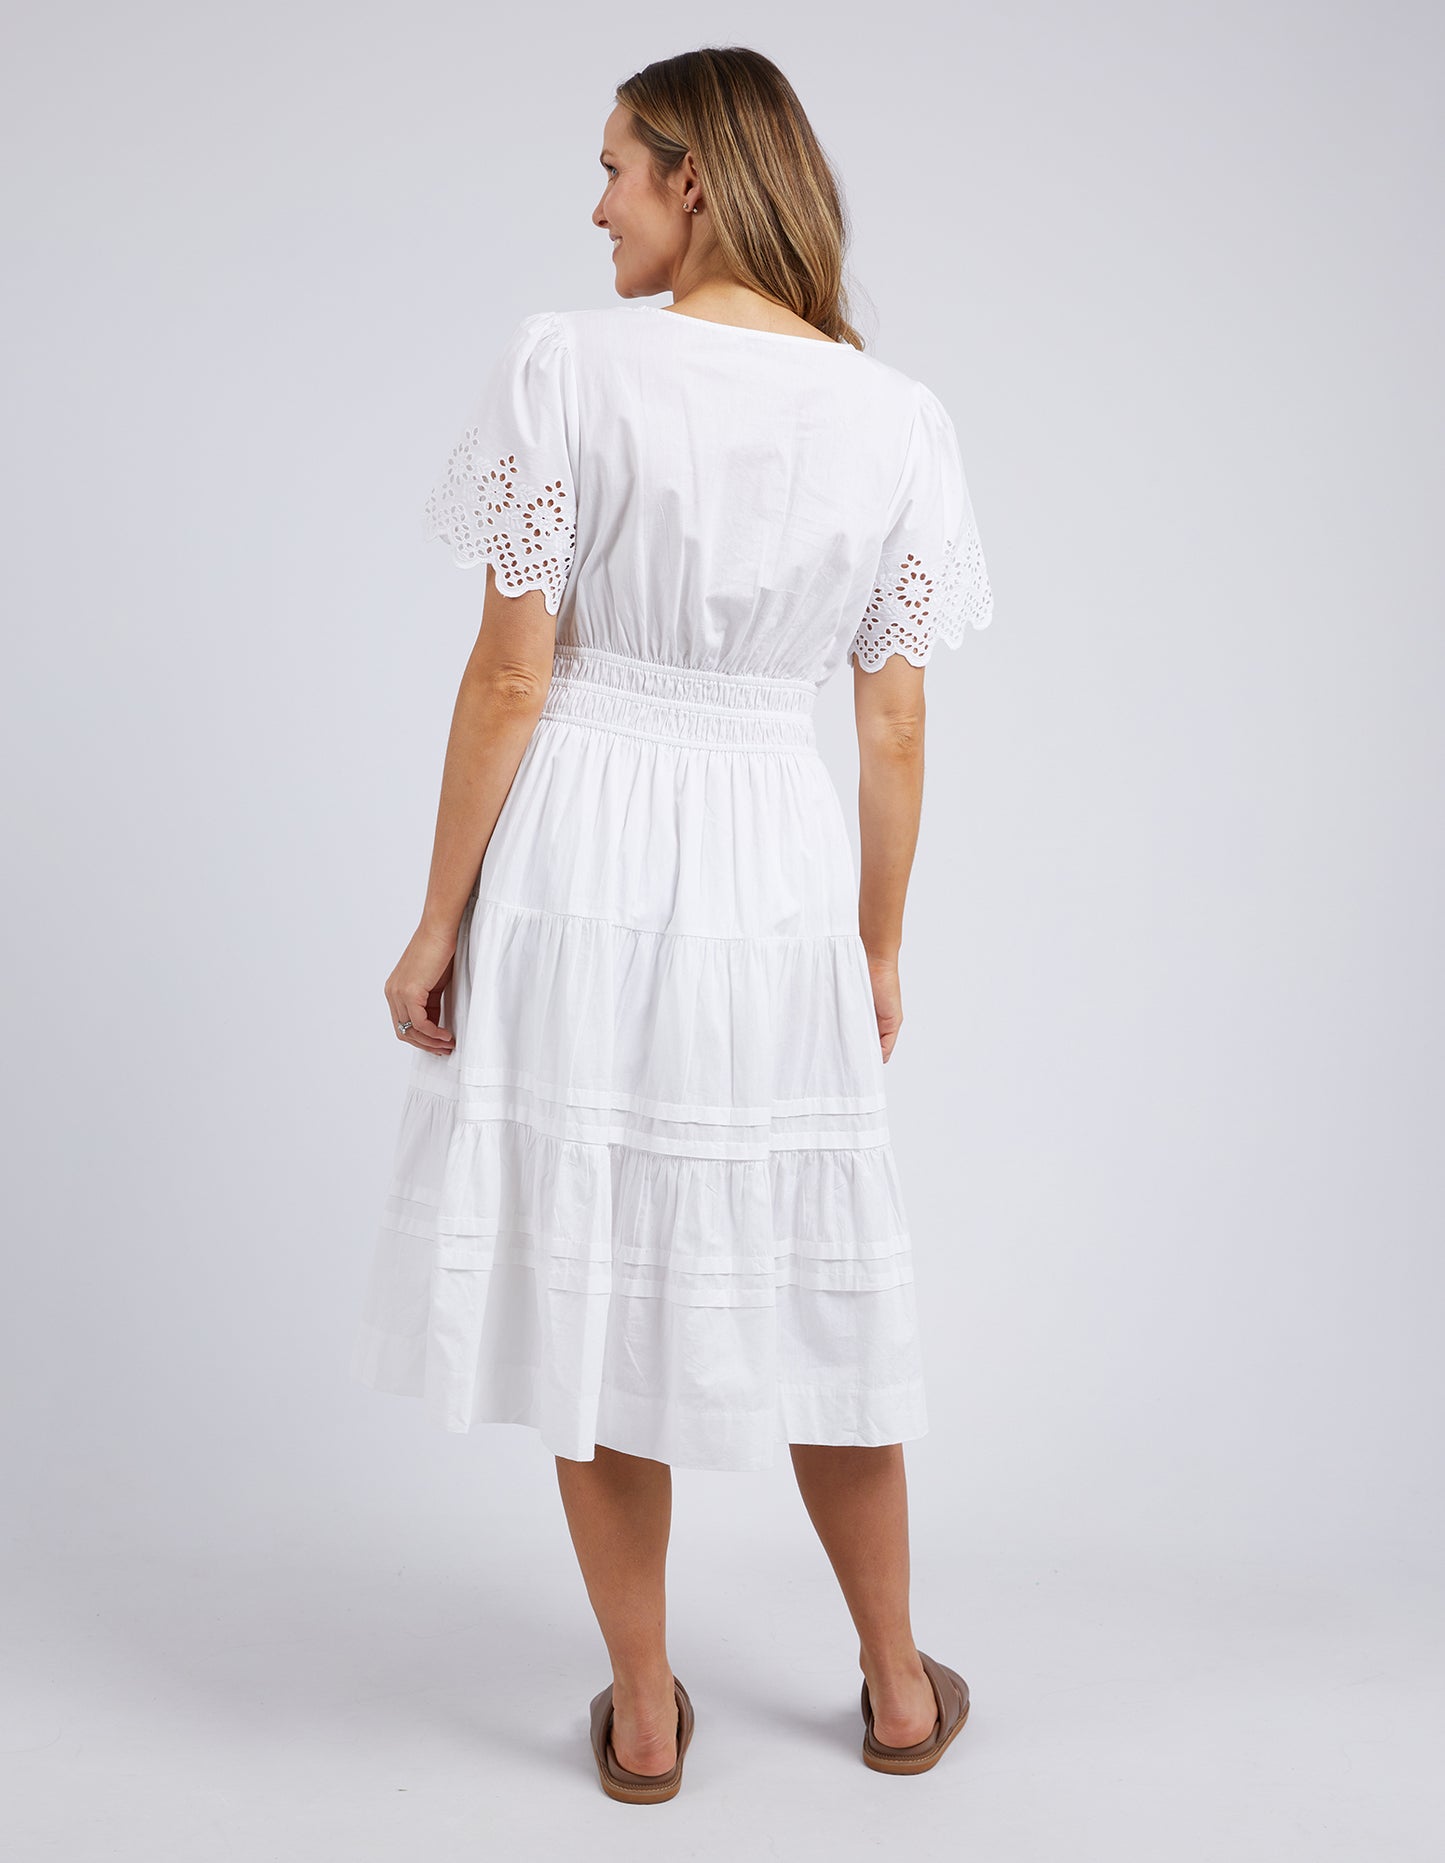 Sloane Dress - White - Foxwood